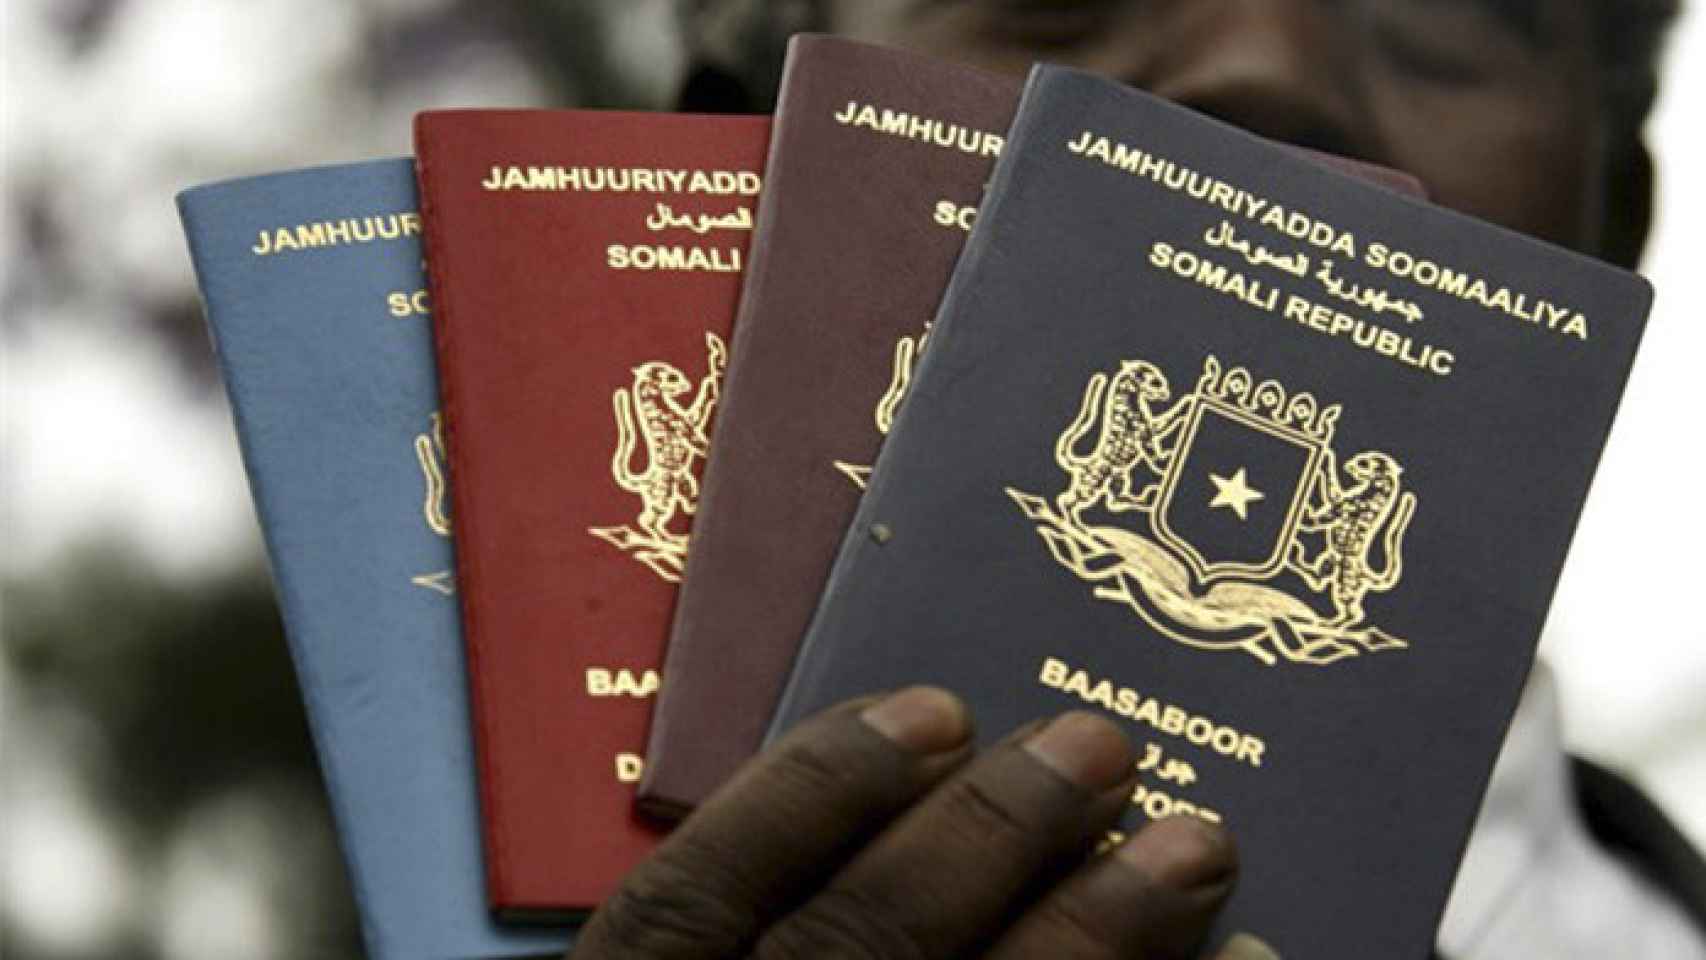 Trending-topic-pasaporte-ranking-visados